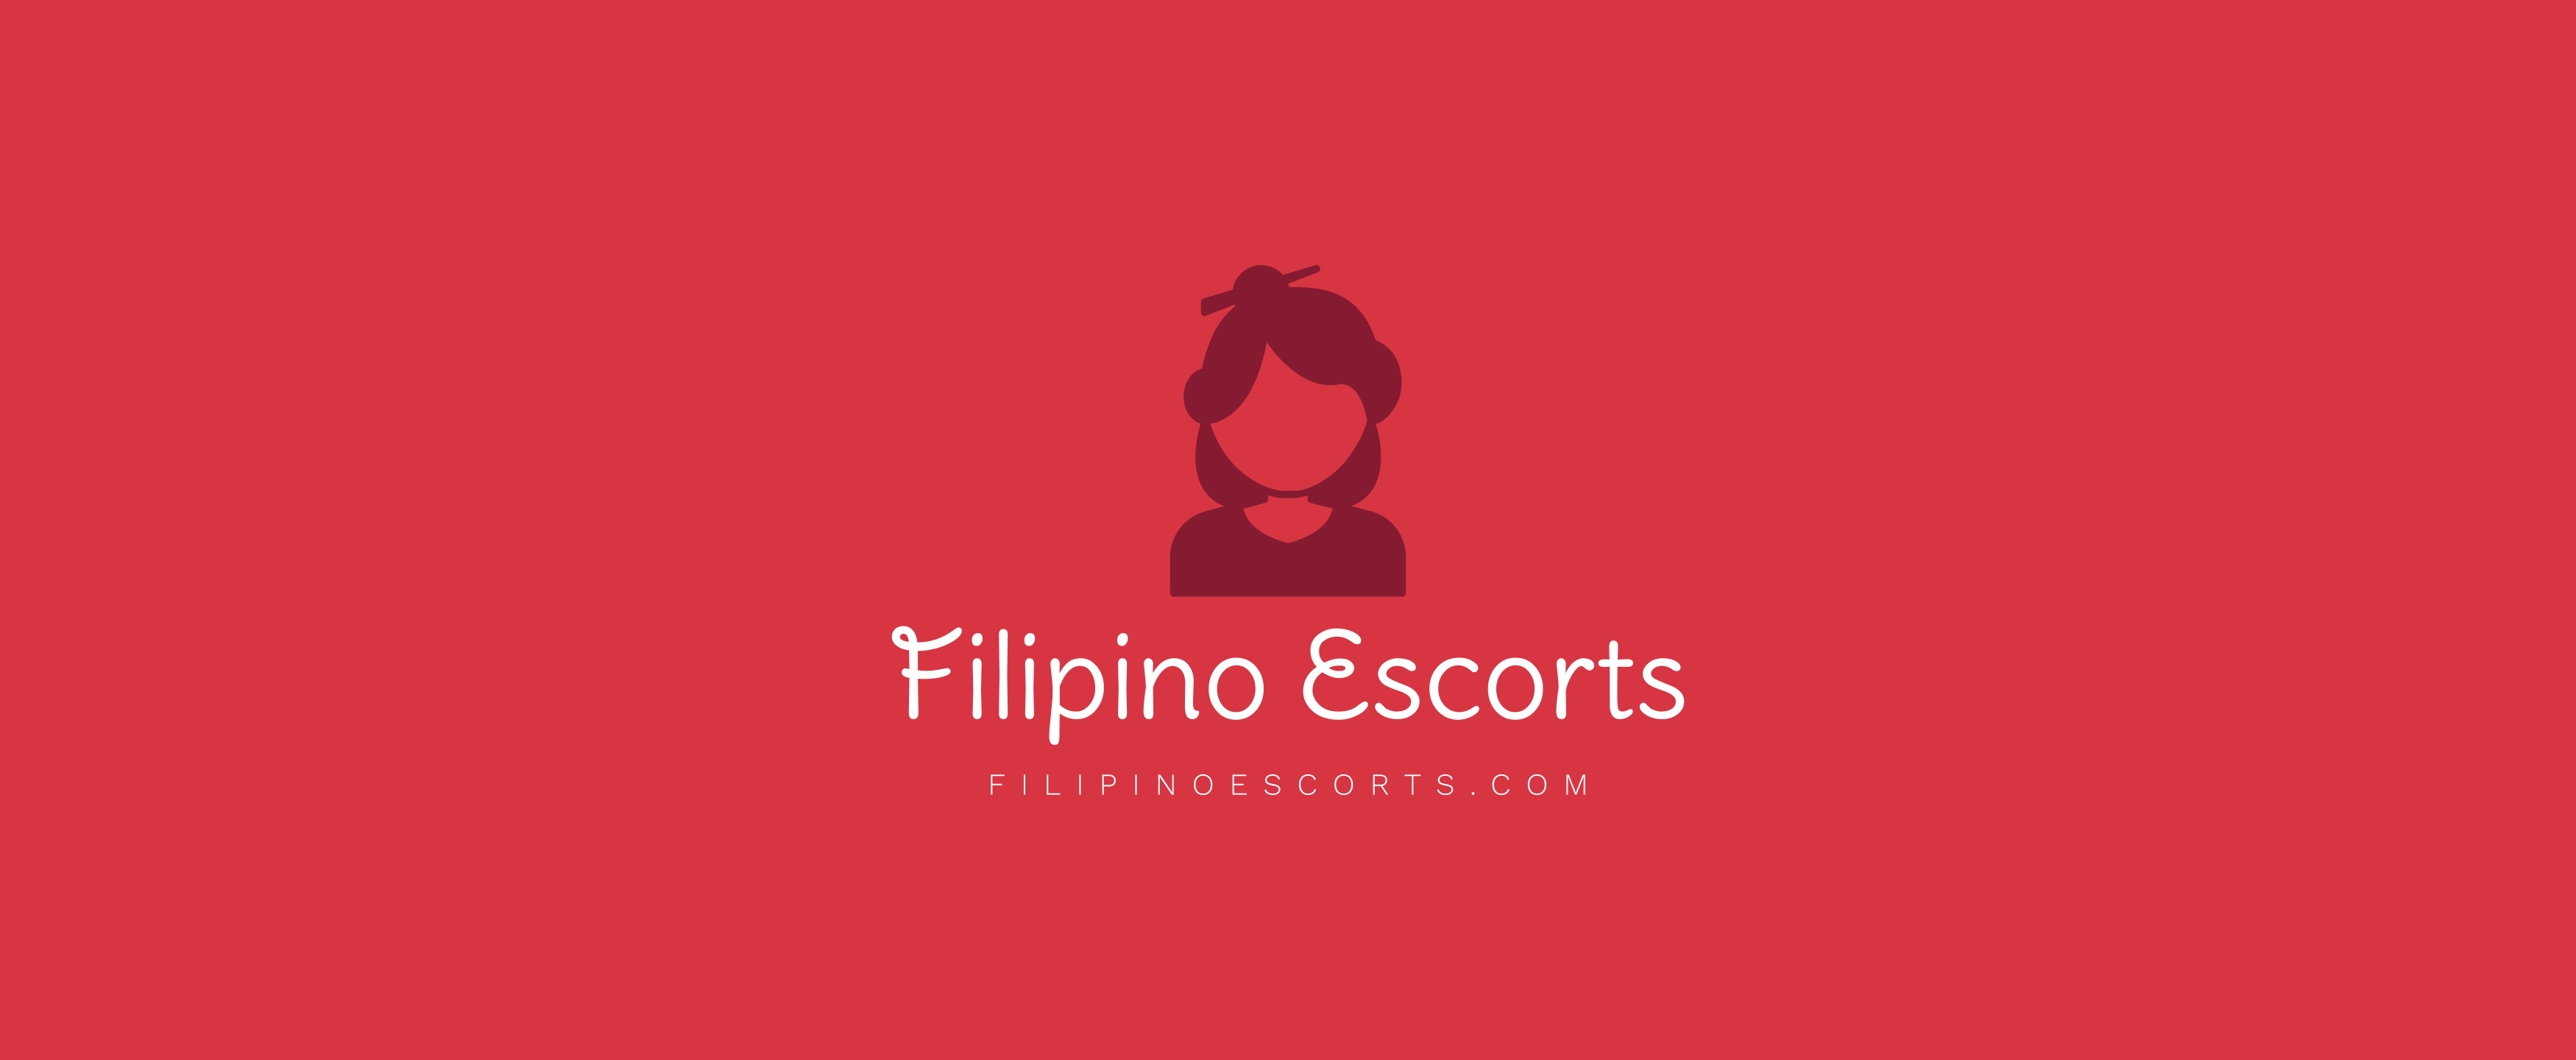 Filipino Escorts